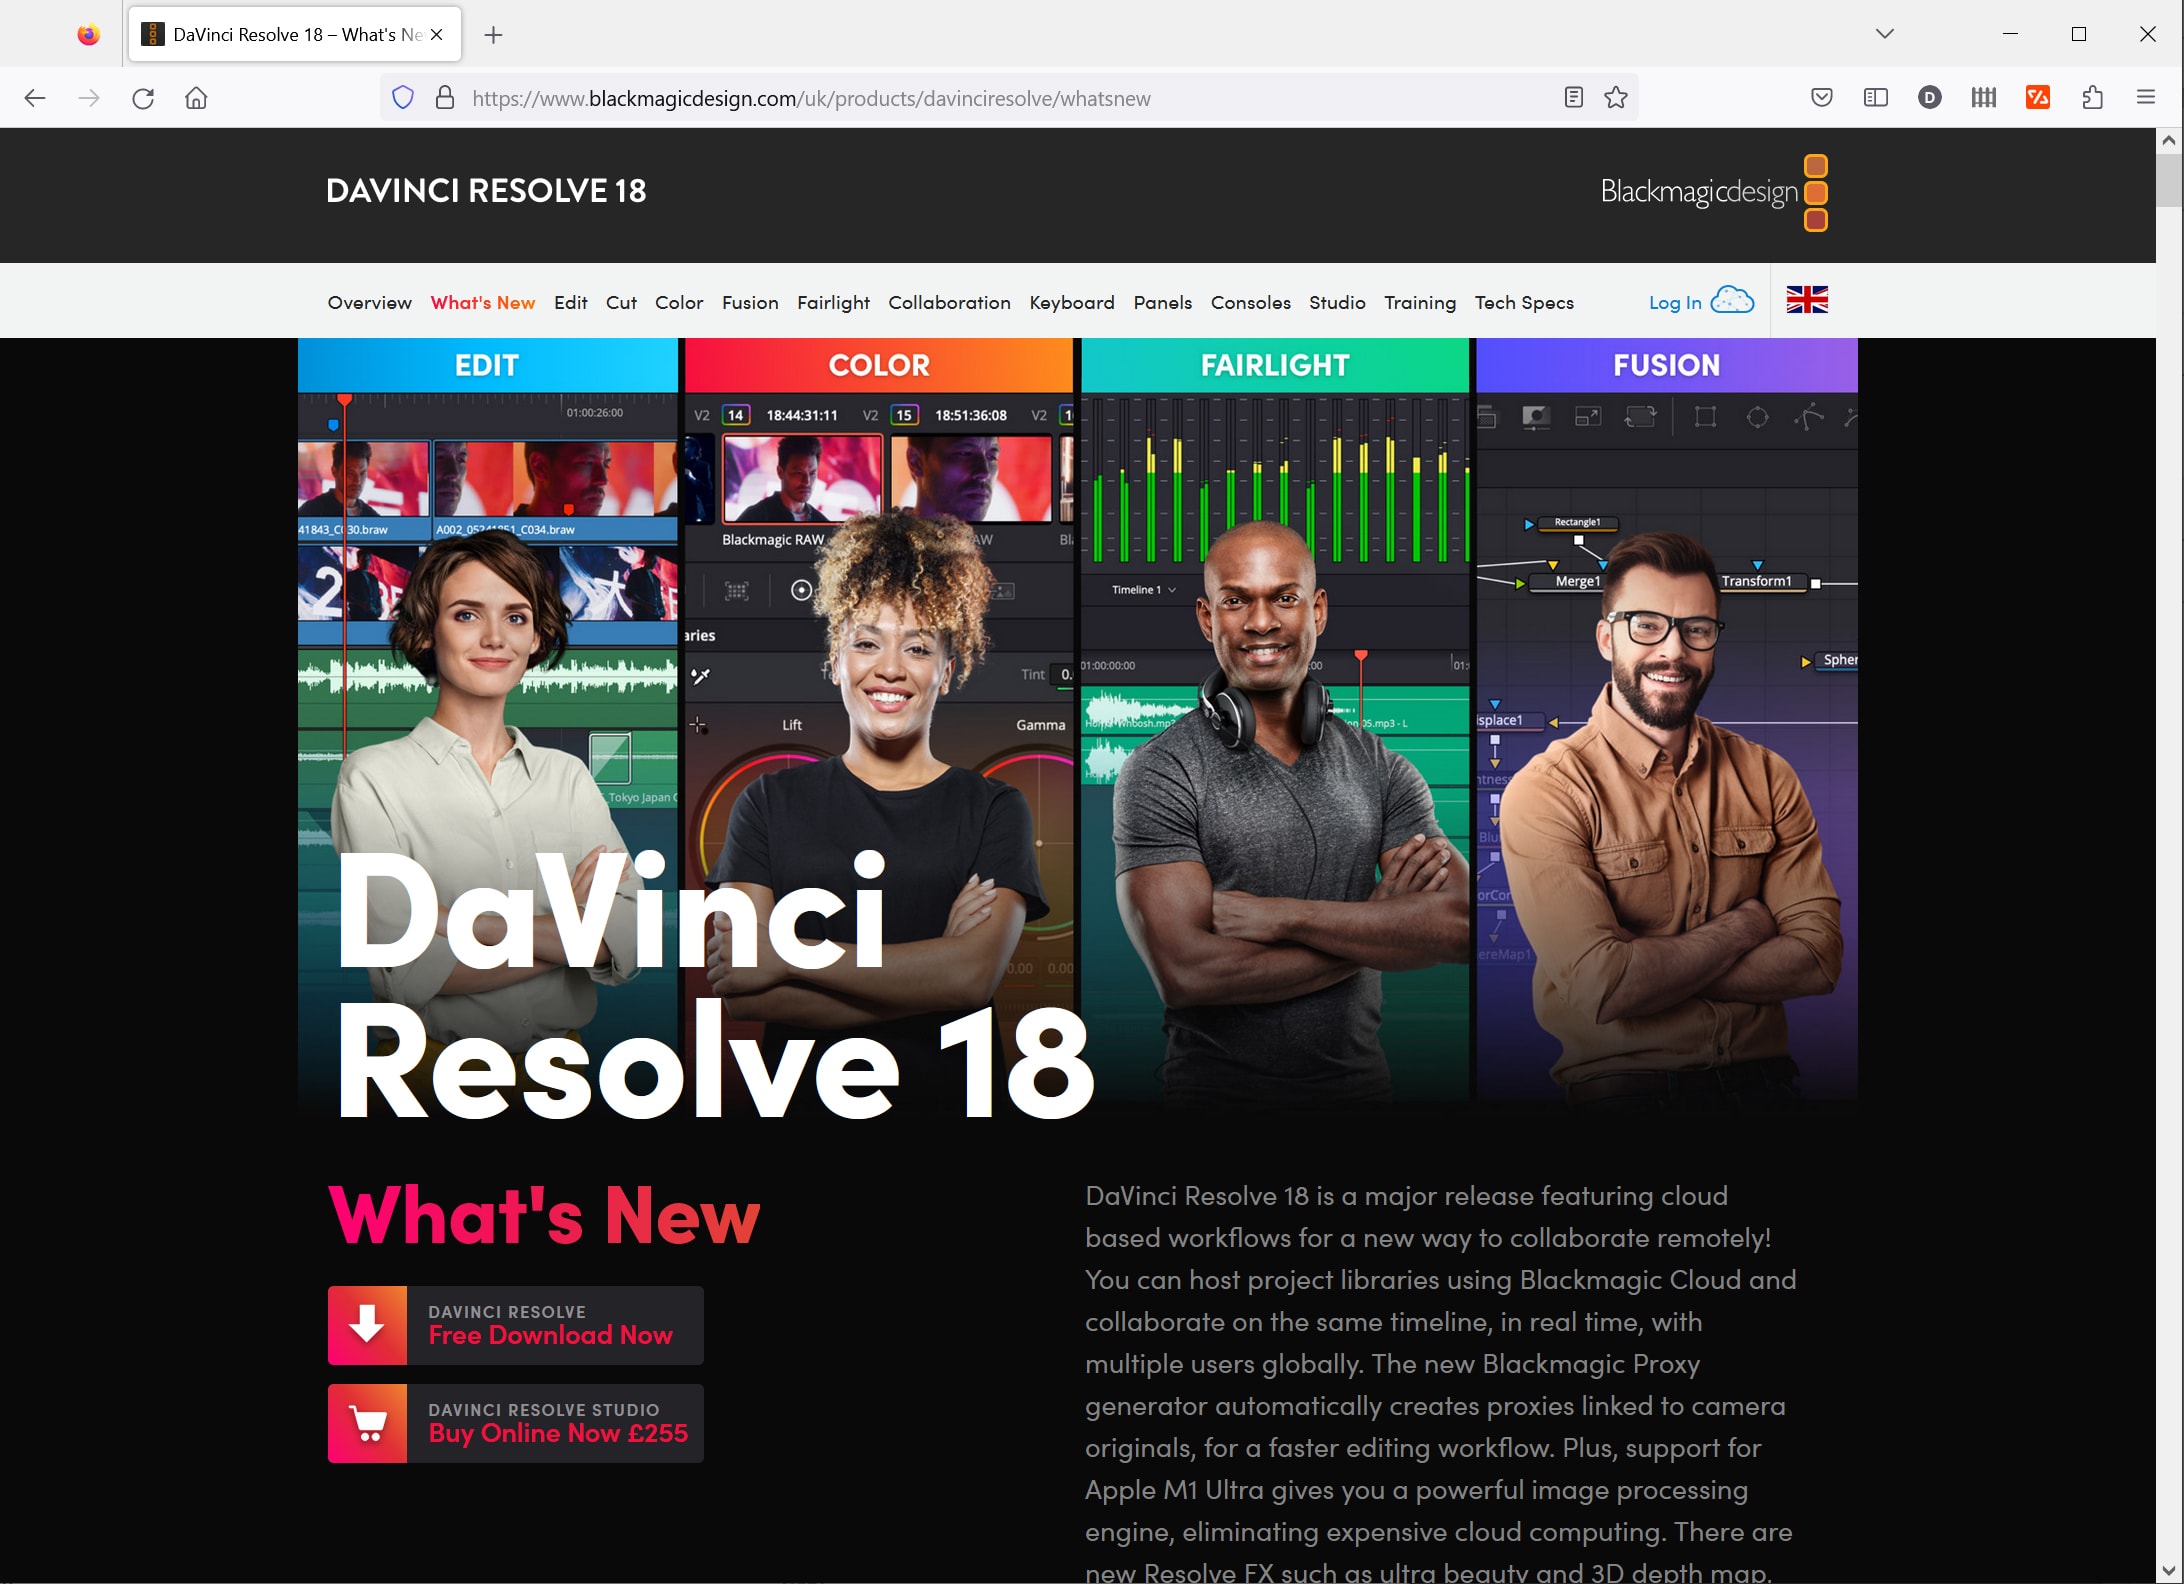 DaVinci Resolve 18 free video software